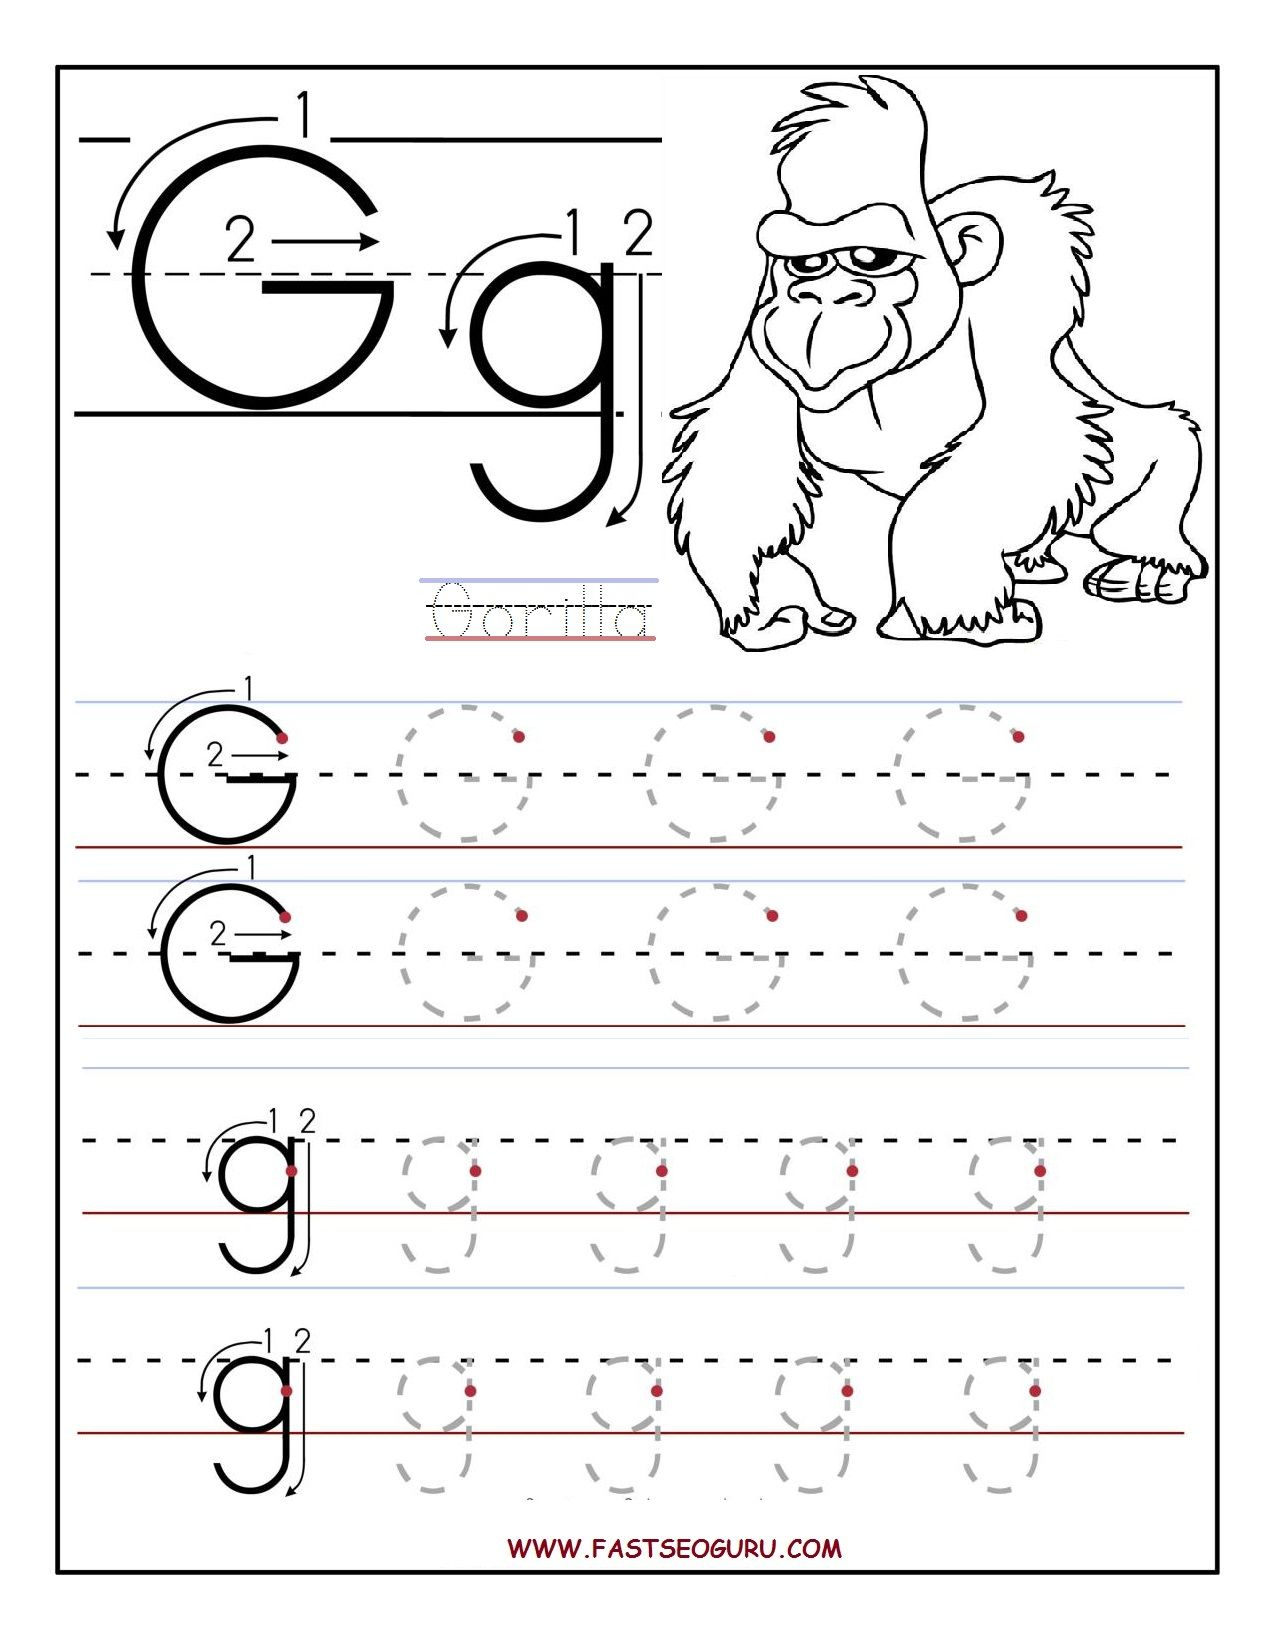 Worksheets For Preschoolers | Printable Letter G Tracing